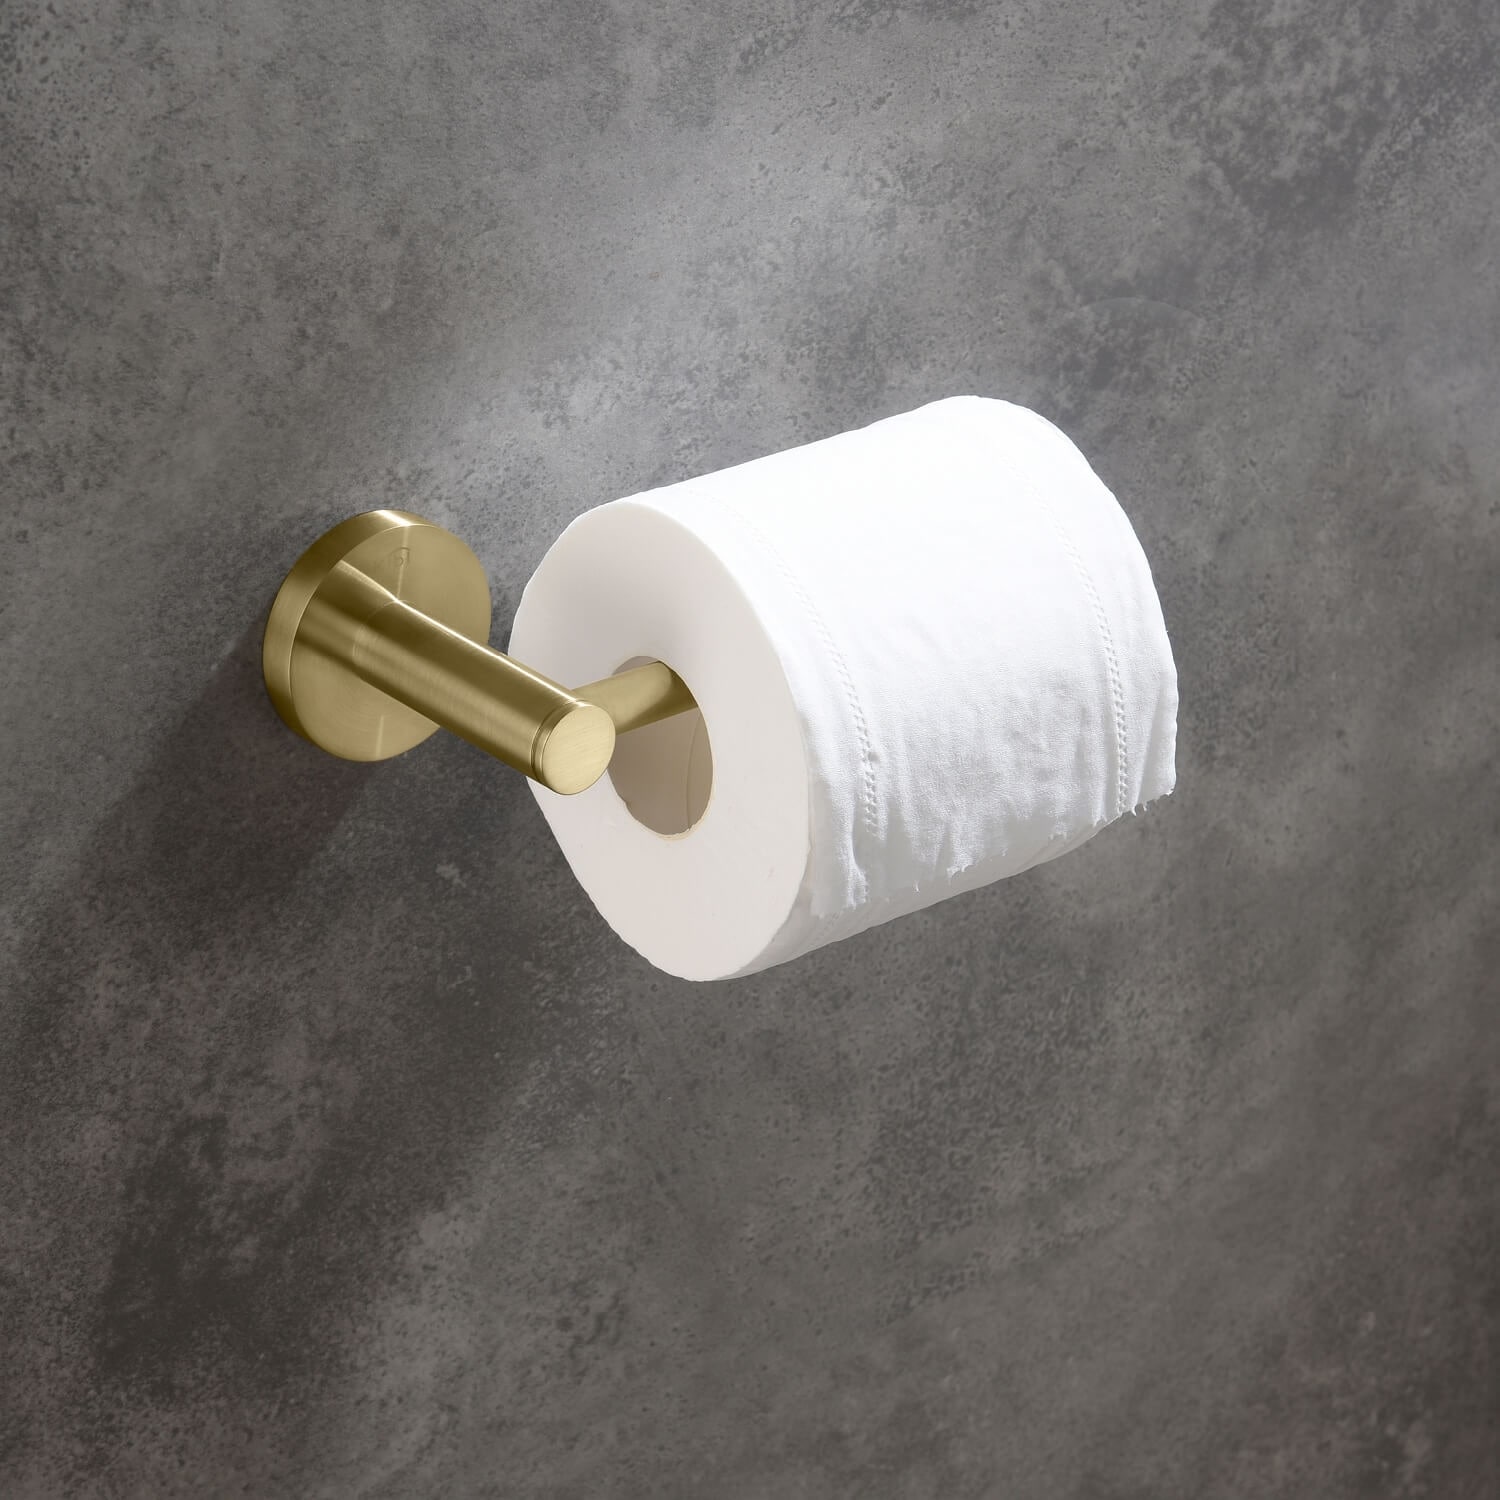 KIBI USA Circular Double Toilet Paper Holder - N/A Brushed Gold